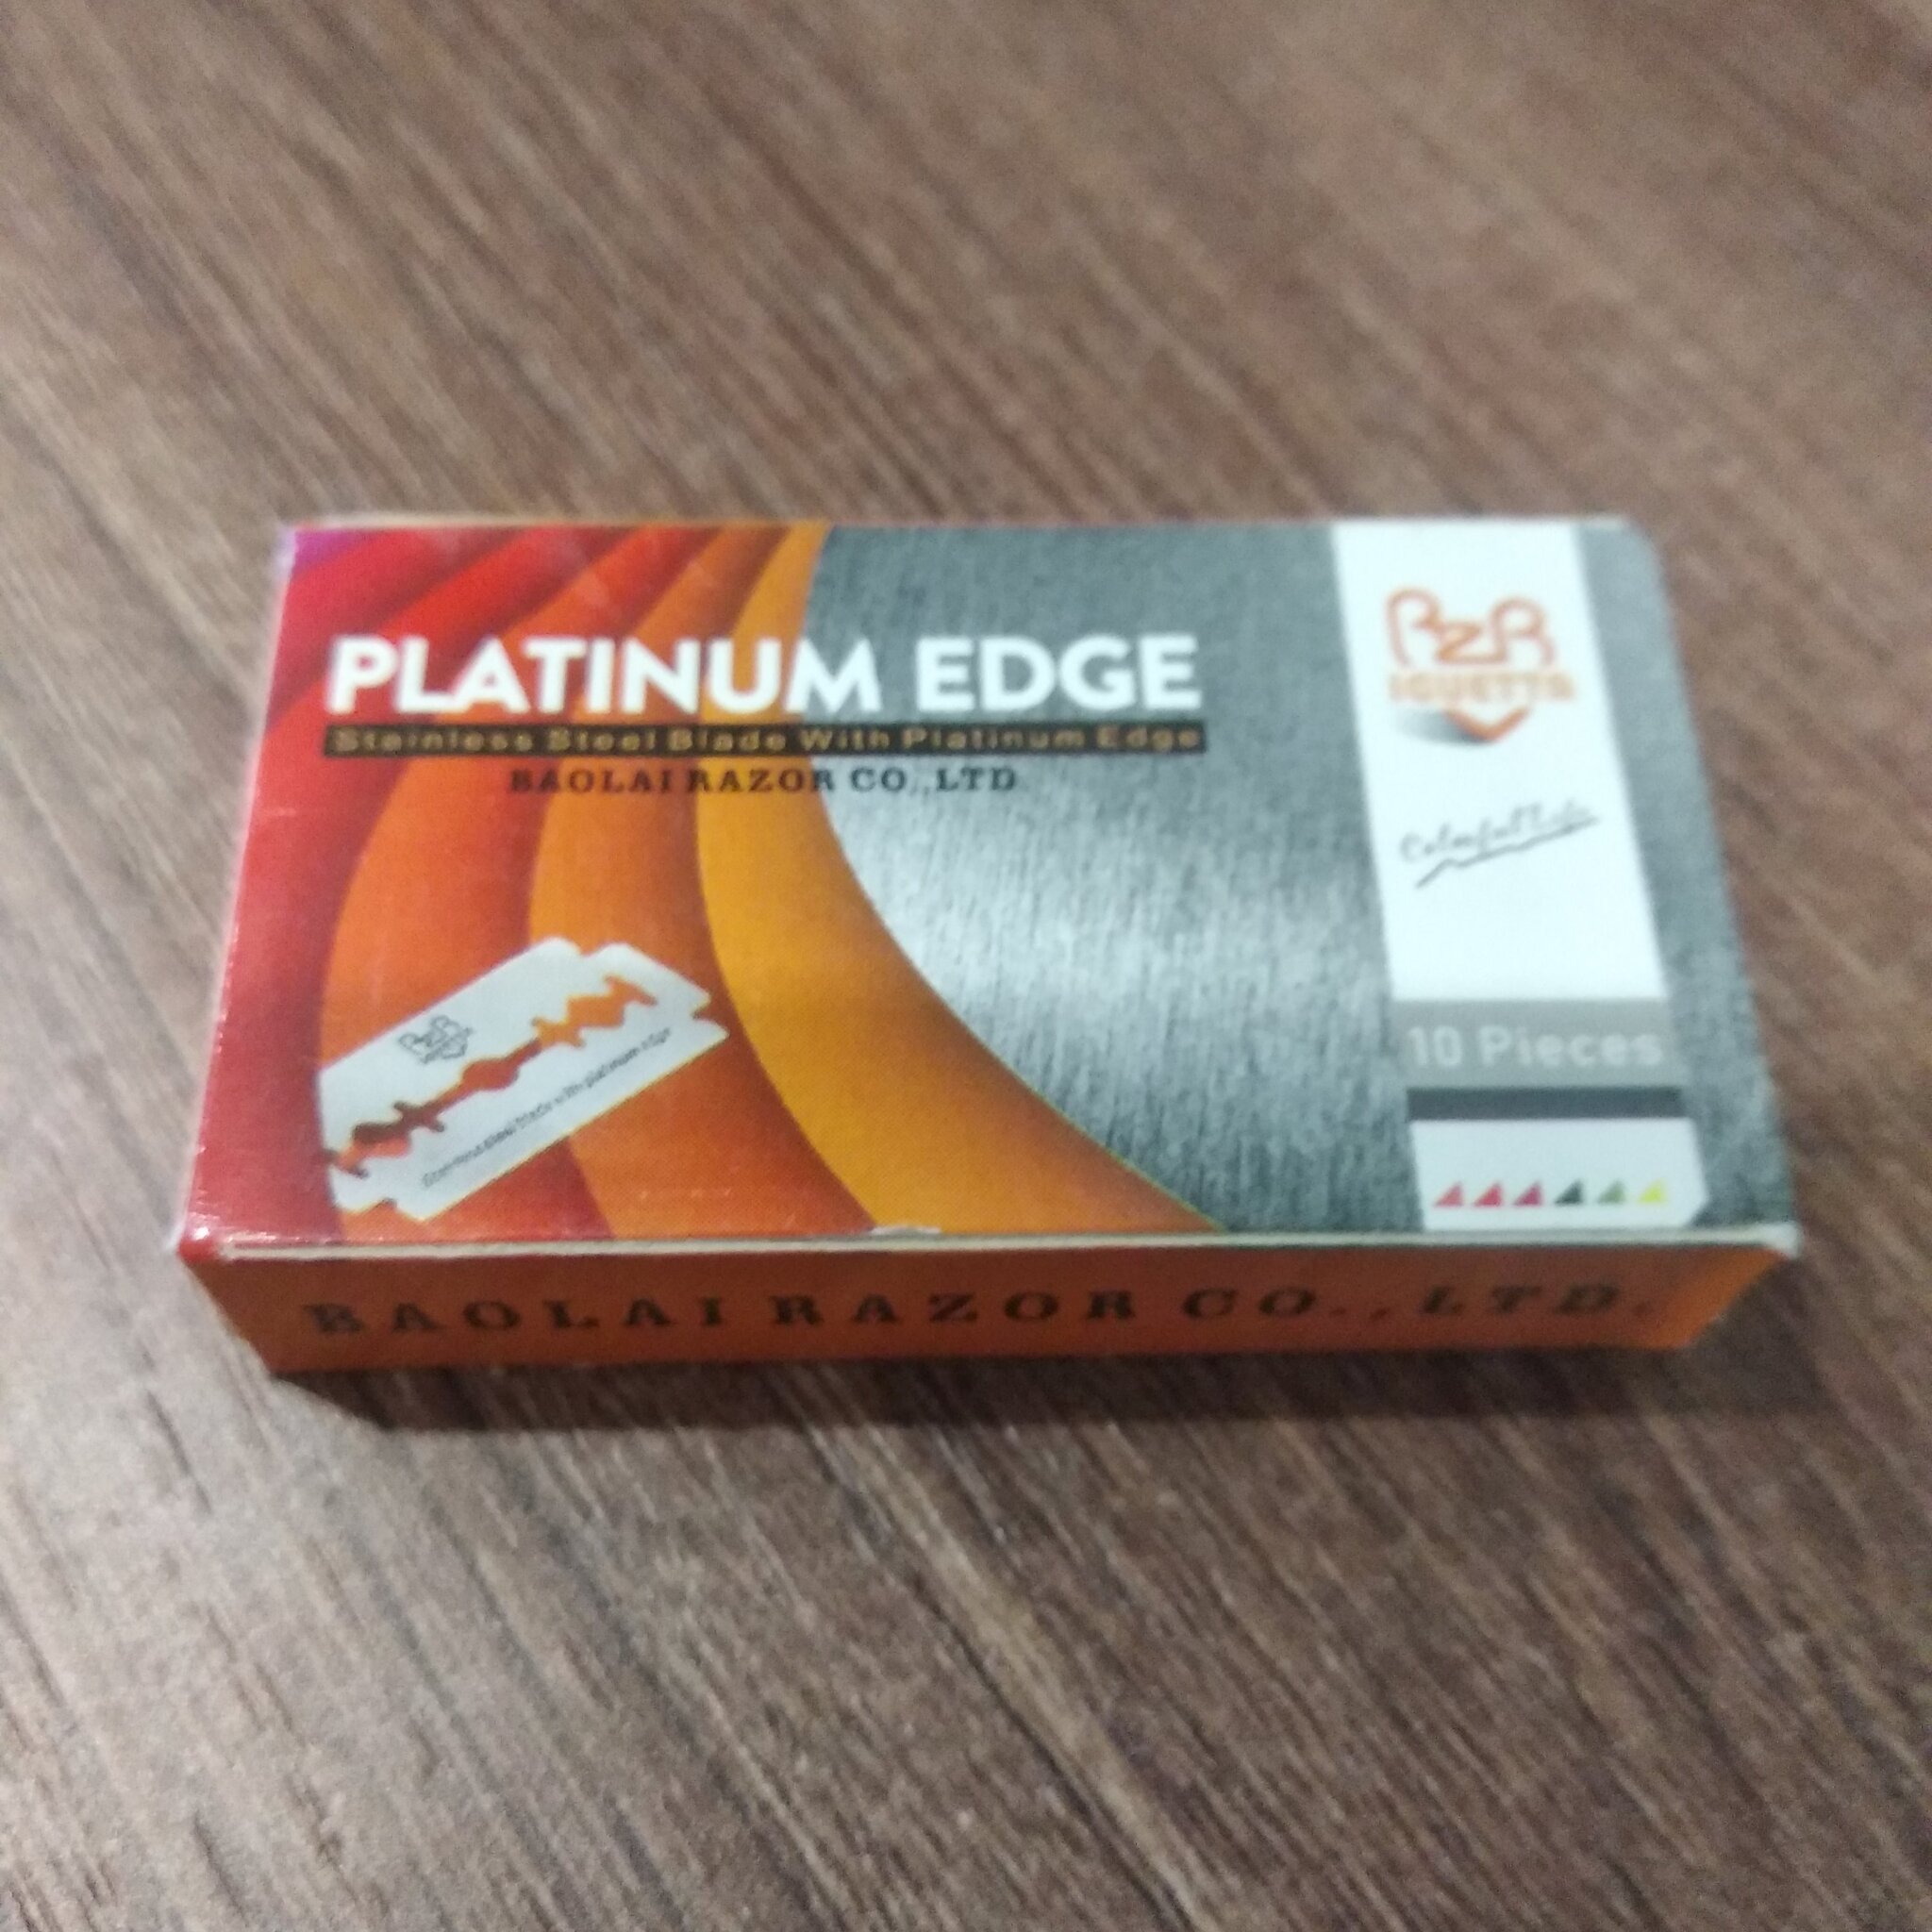 Baolai Platinum Edge Shaving Blades - Vkb, Classic shaving, Shaving, Blade, Chinese goods, Longpost